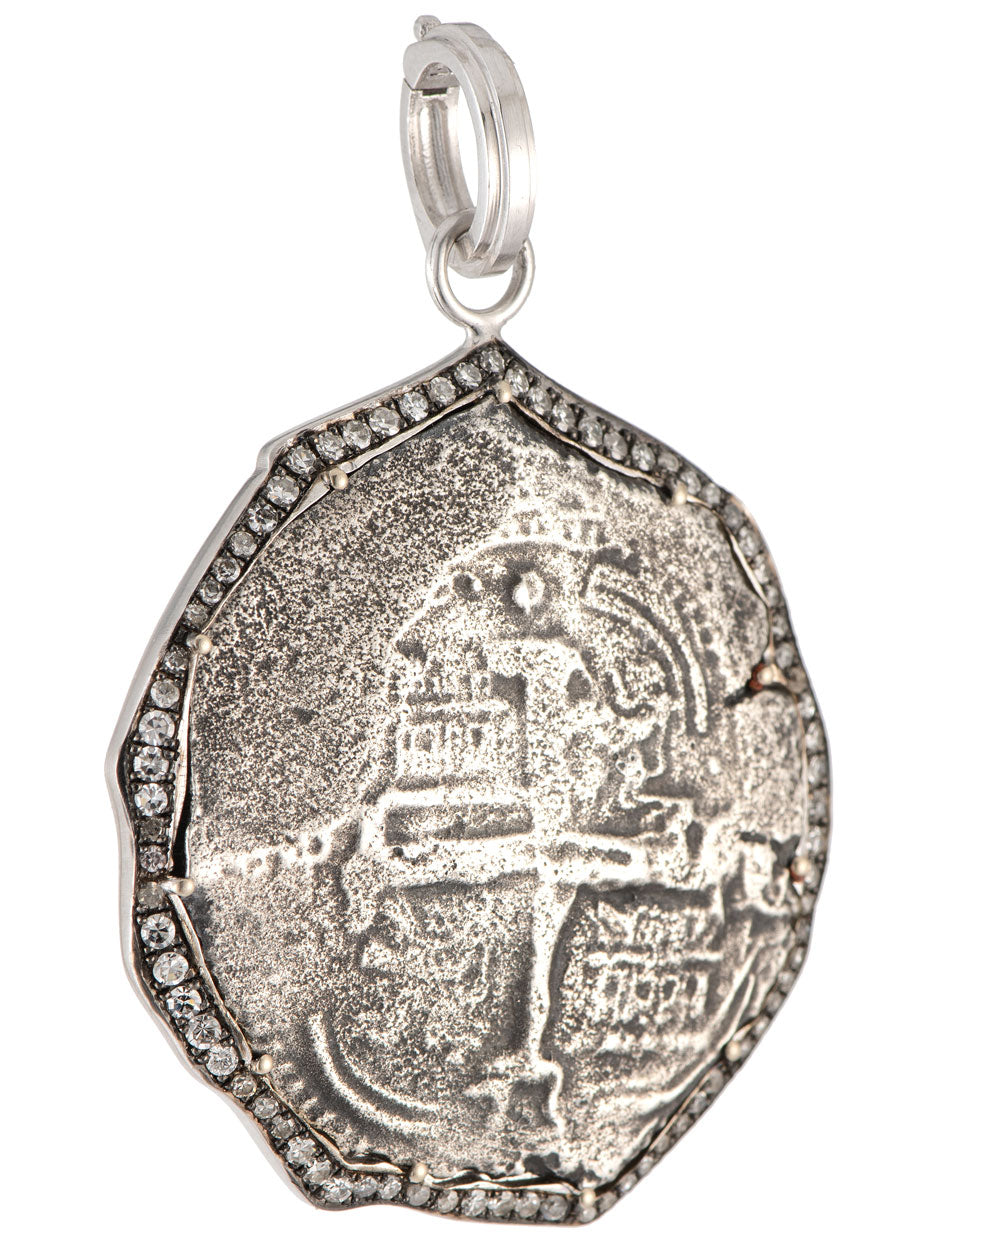 1670 Spanish Shipwreck Coin Pendant